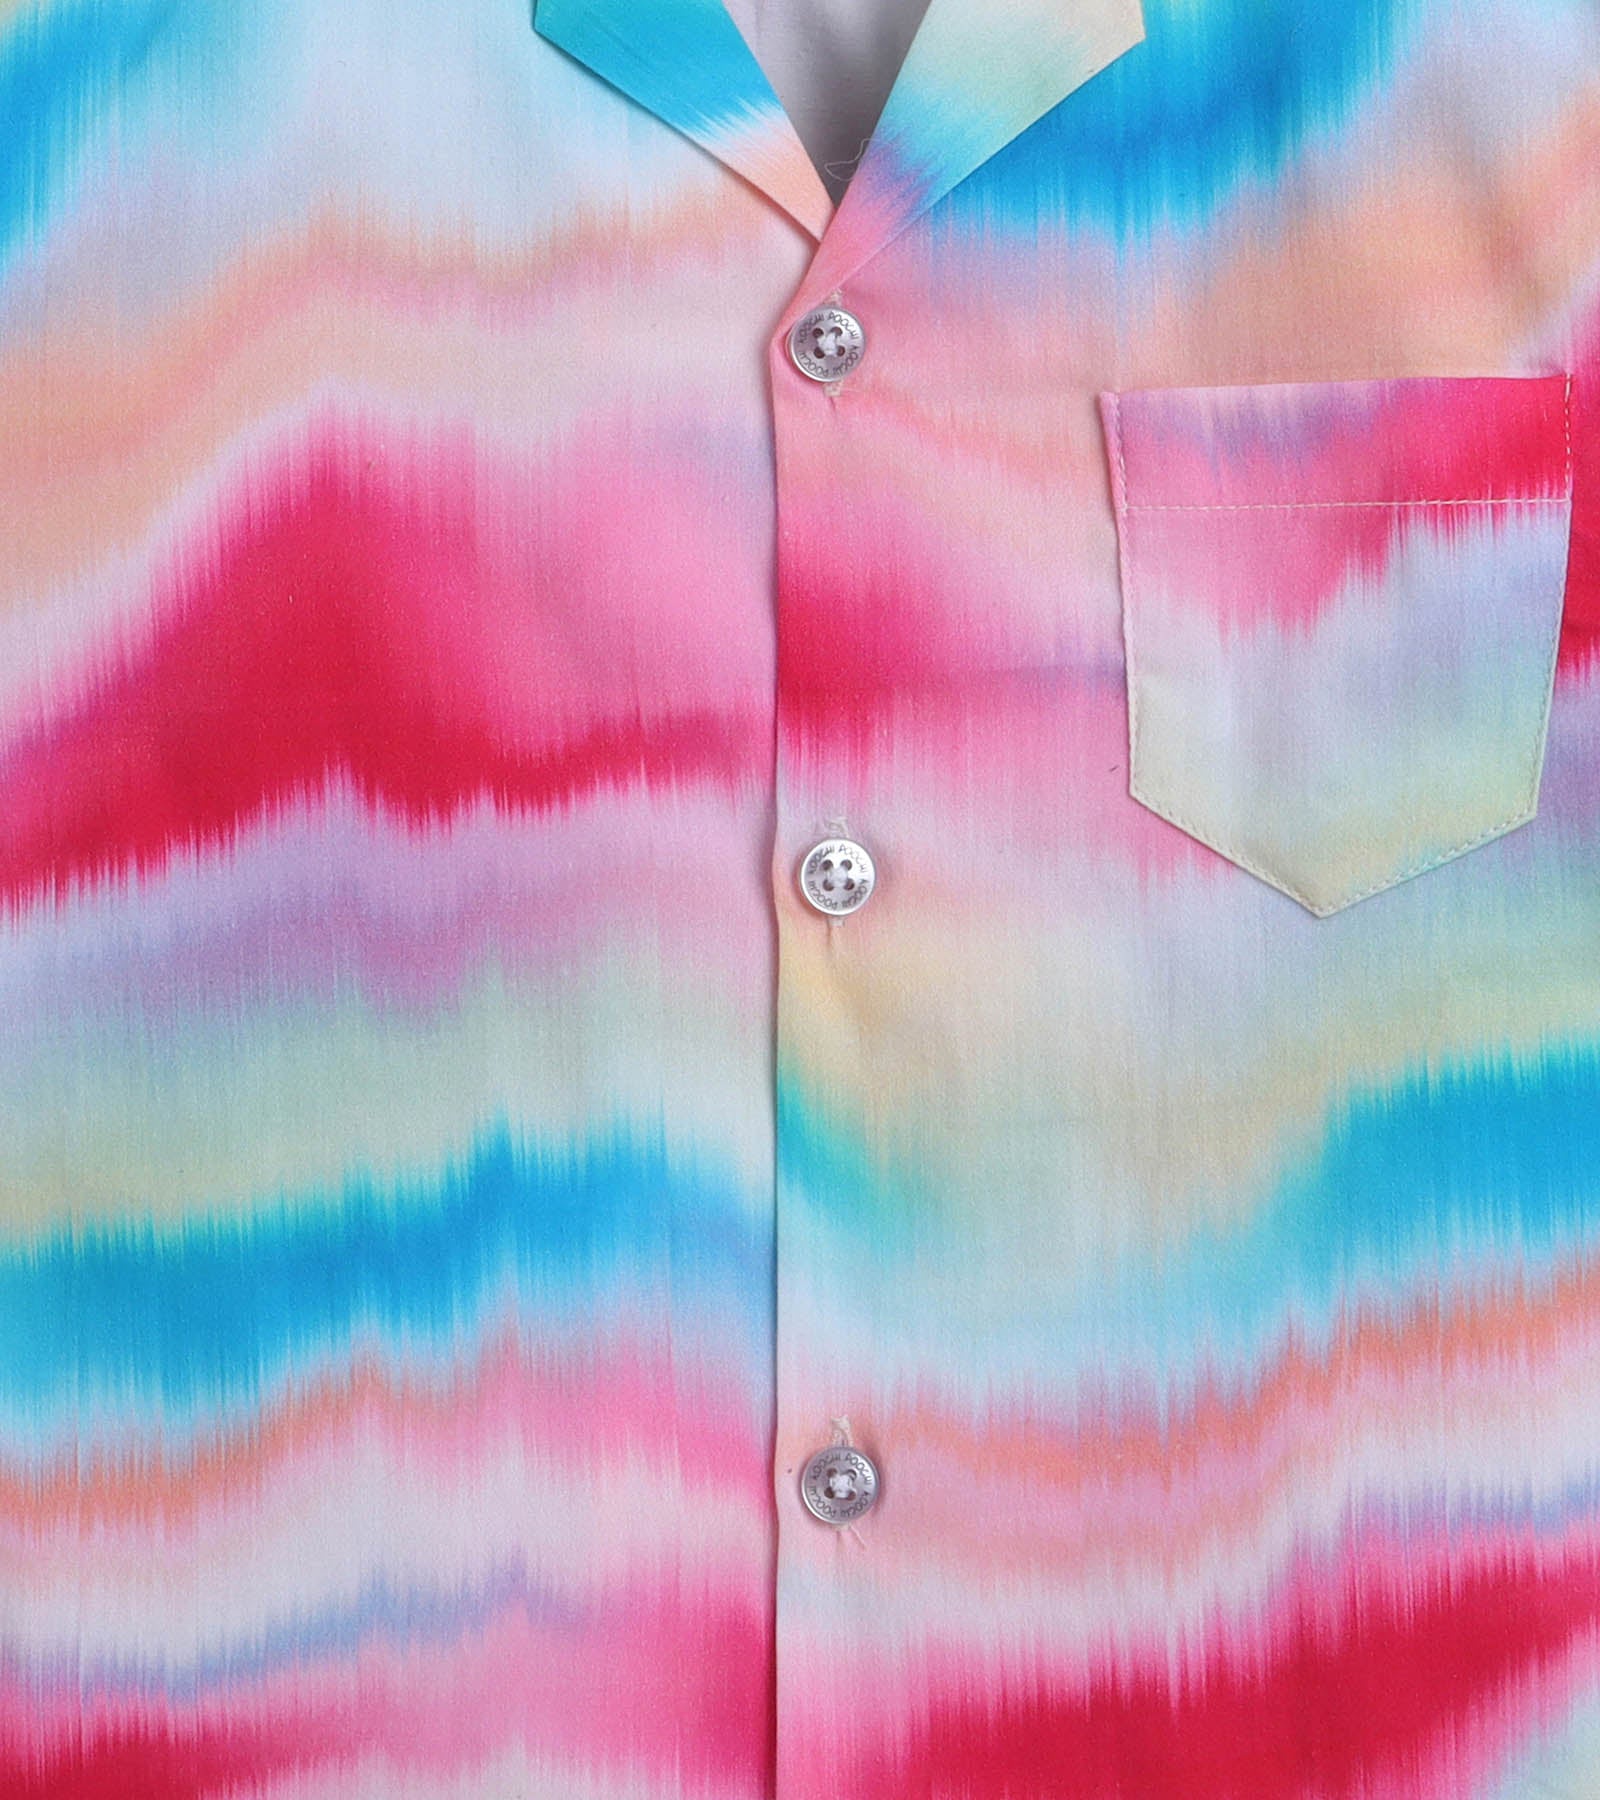 Colour Waves Digital printed Boys Shirt